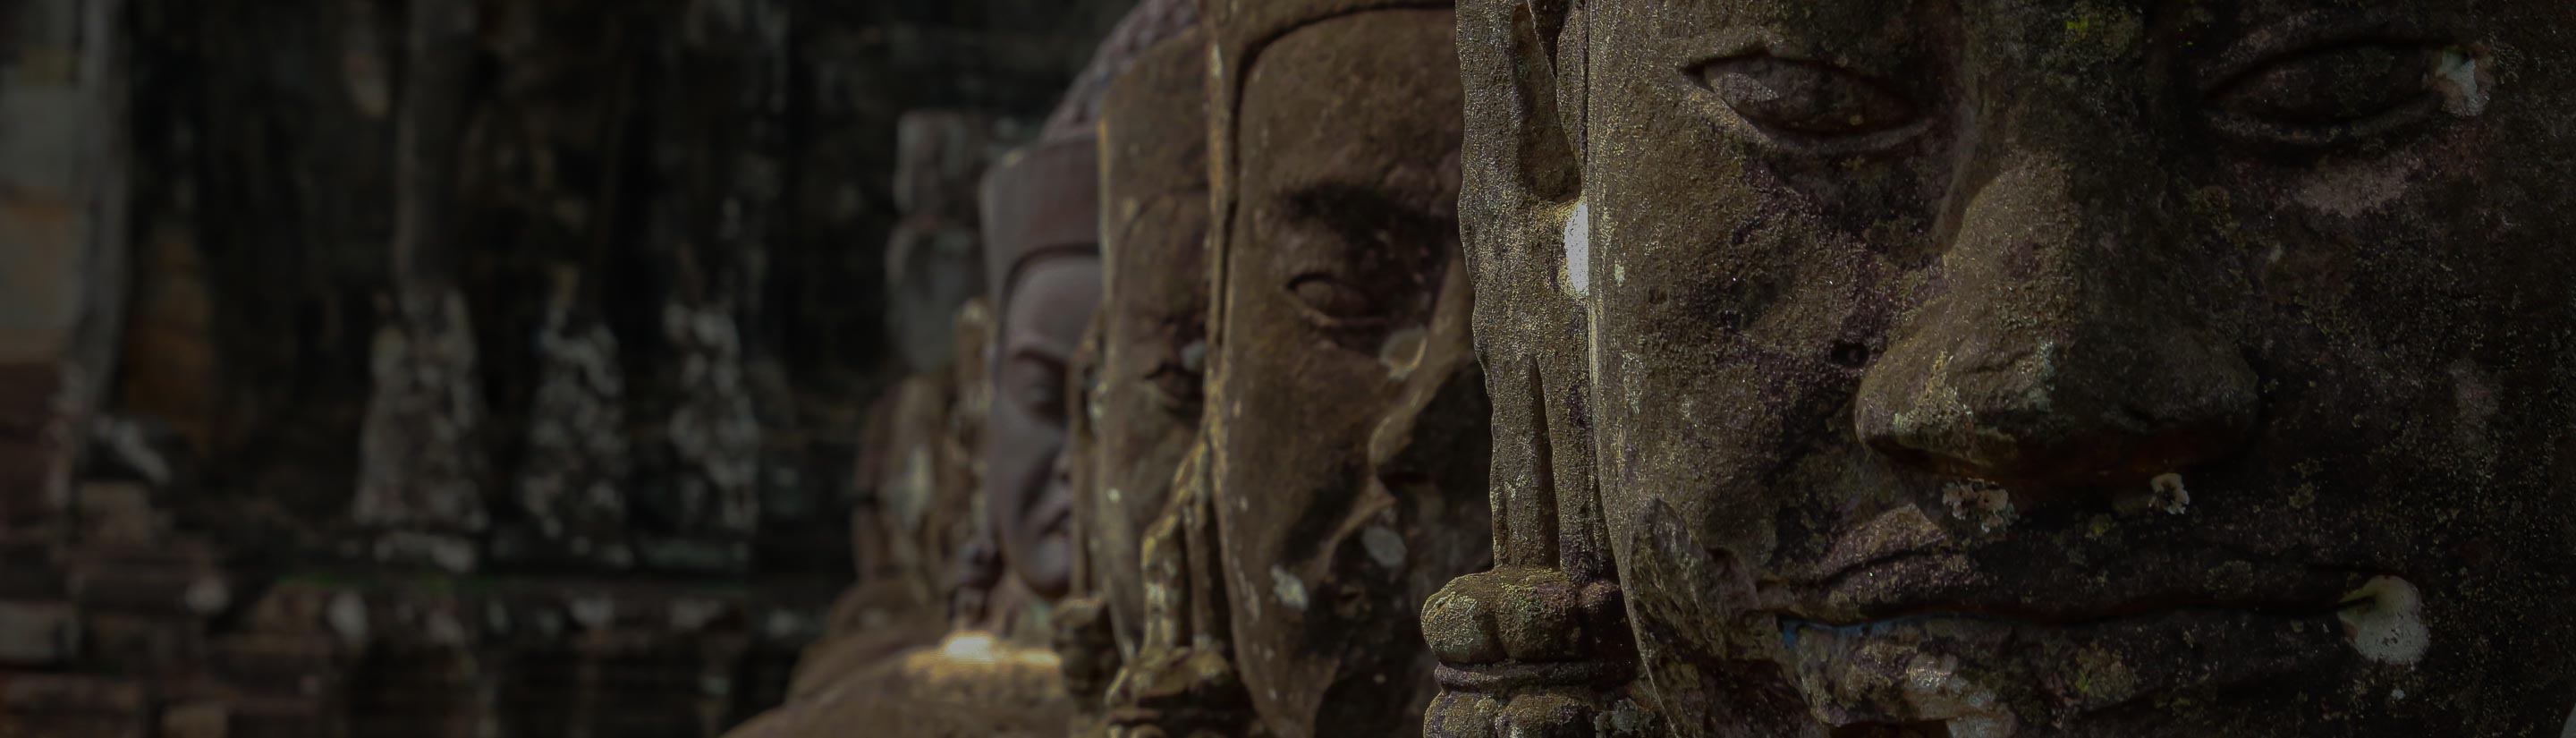 Steinköpfe in Angkor Wat bei Siem Reap in Kambodscha